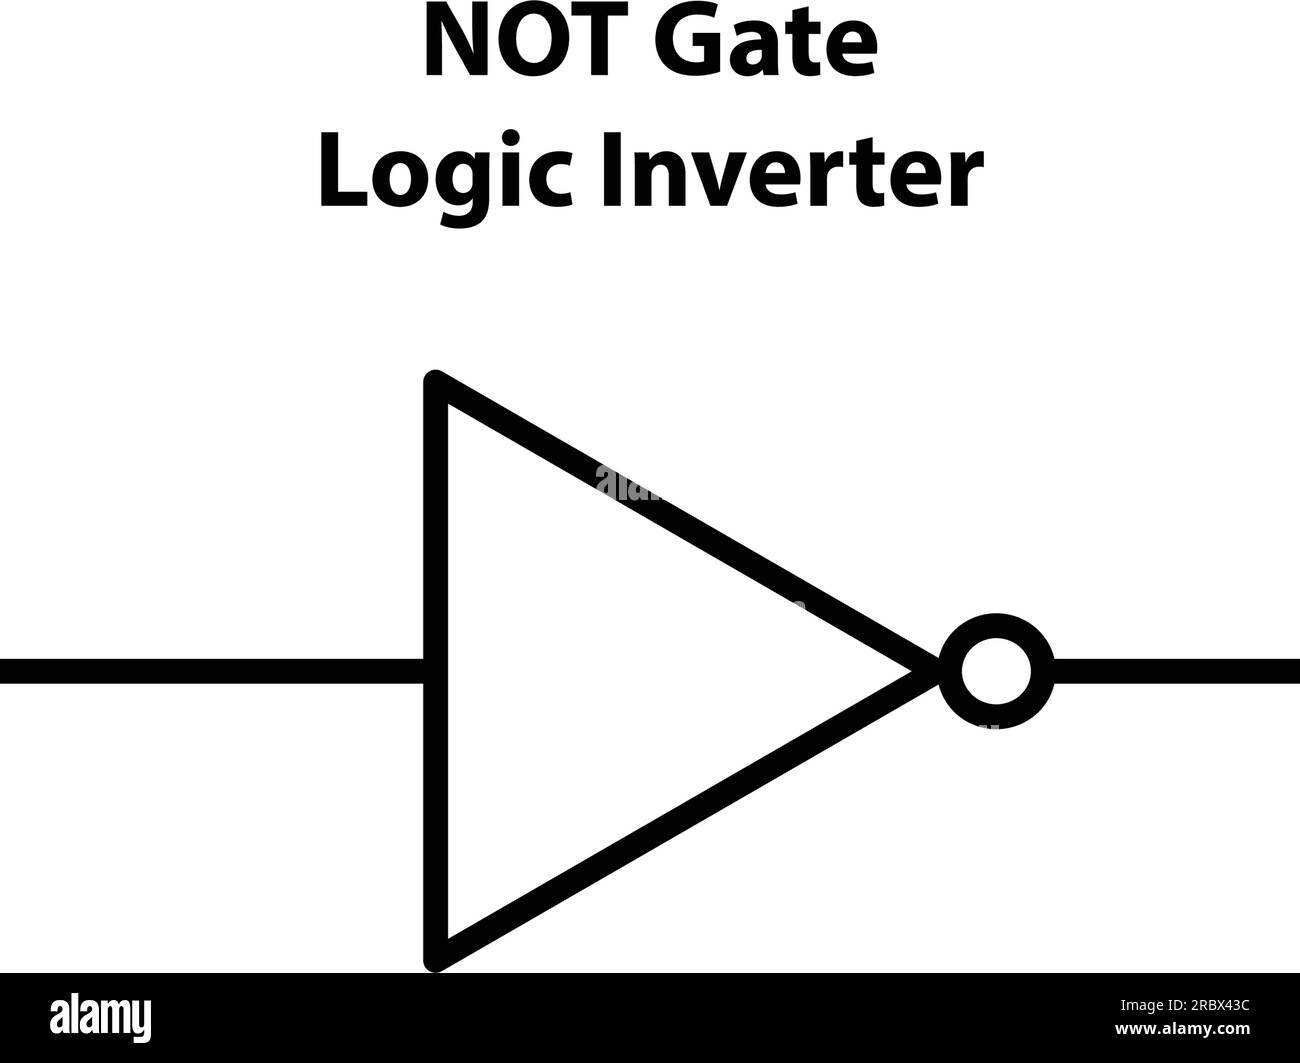 NOT Gate logic inverter. electronic symbol of illustration of basic circuit symbols. Electrical symbols, study content of physics students. Stock Vector